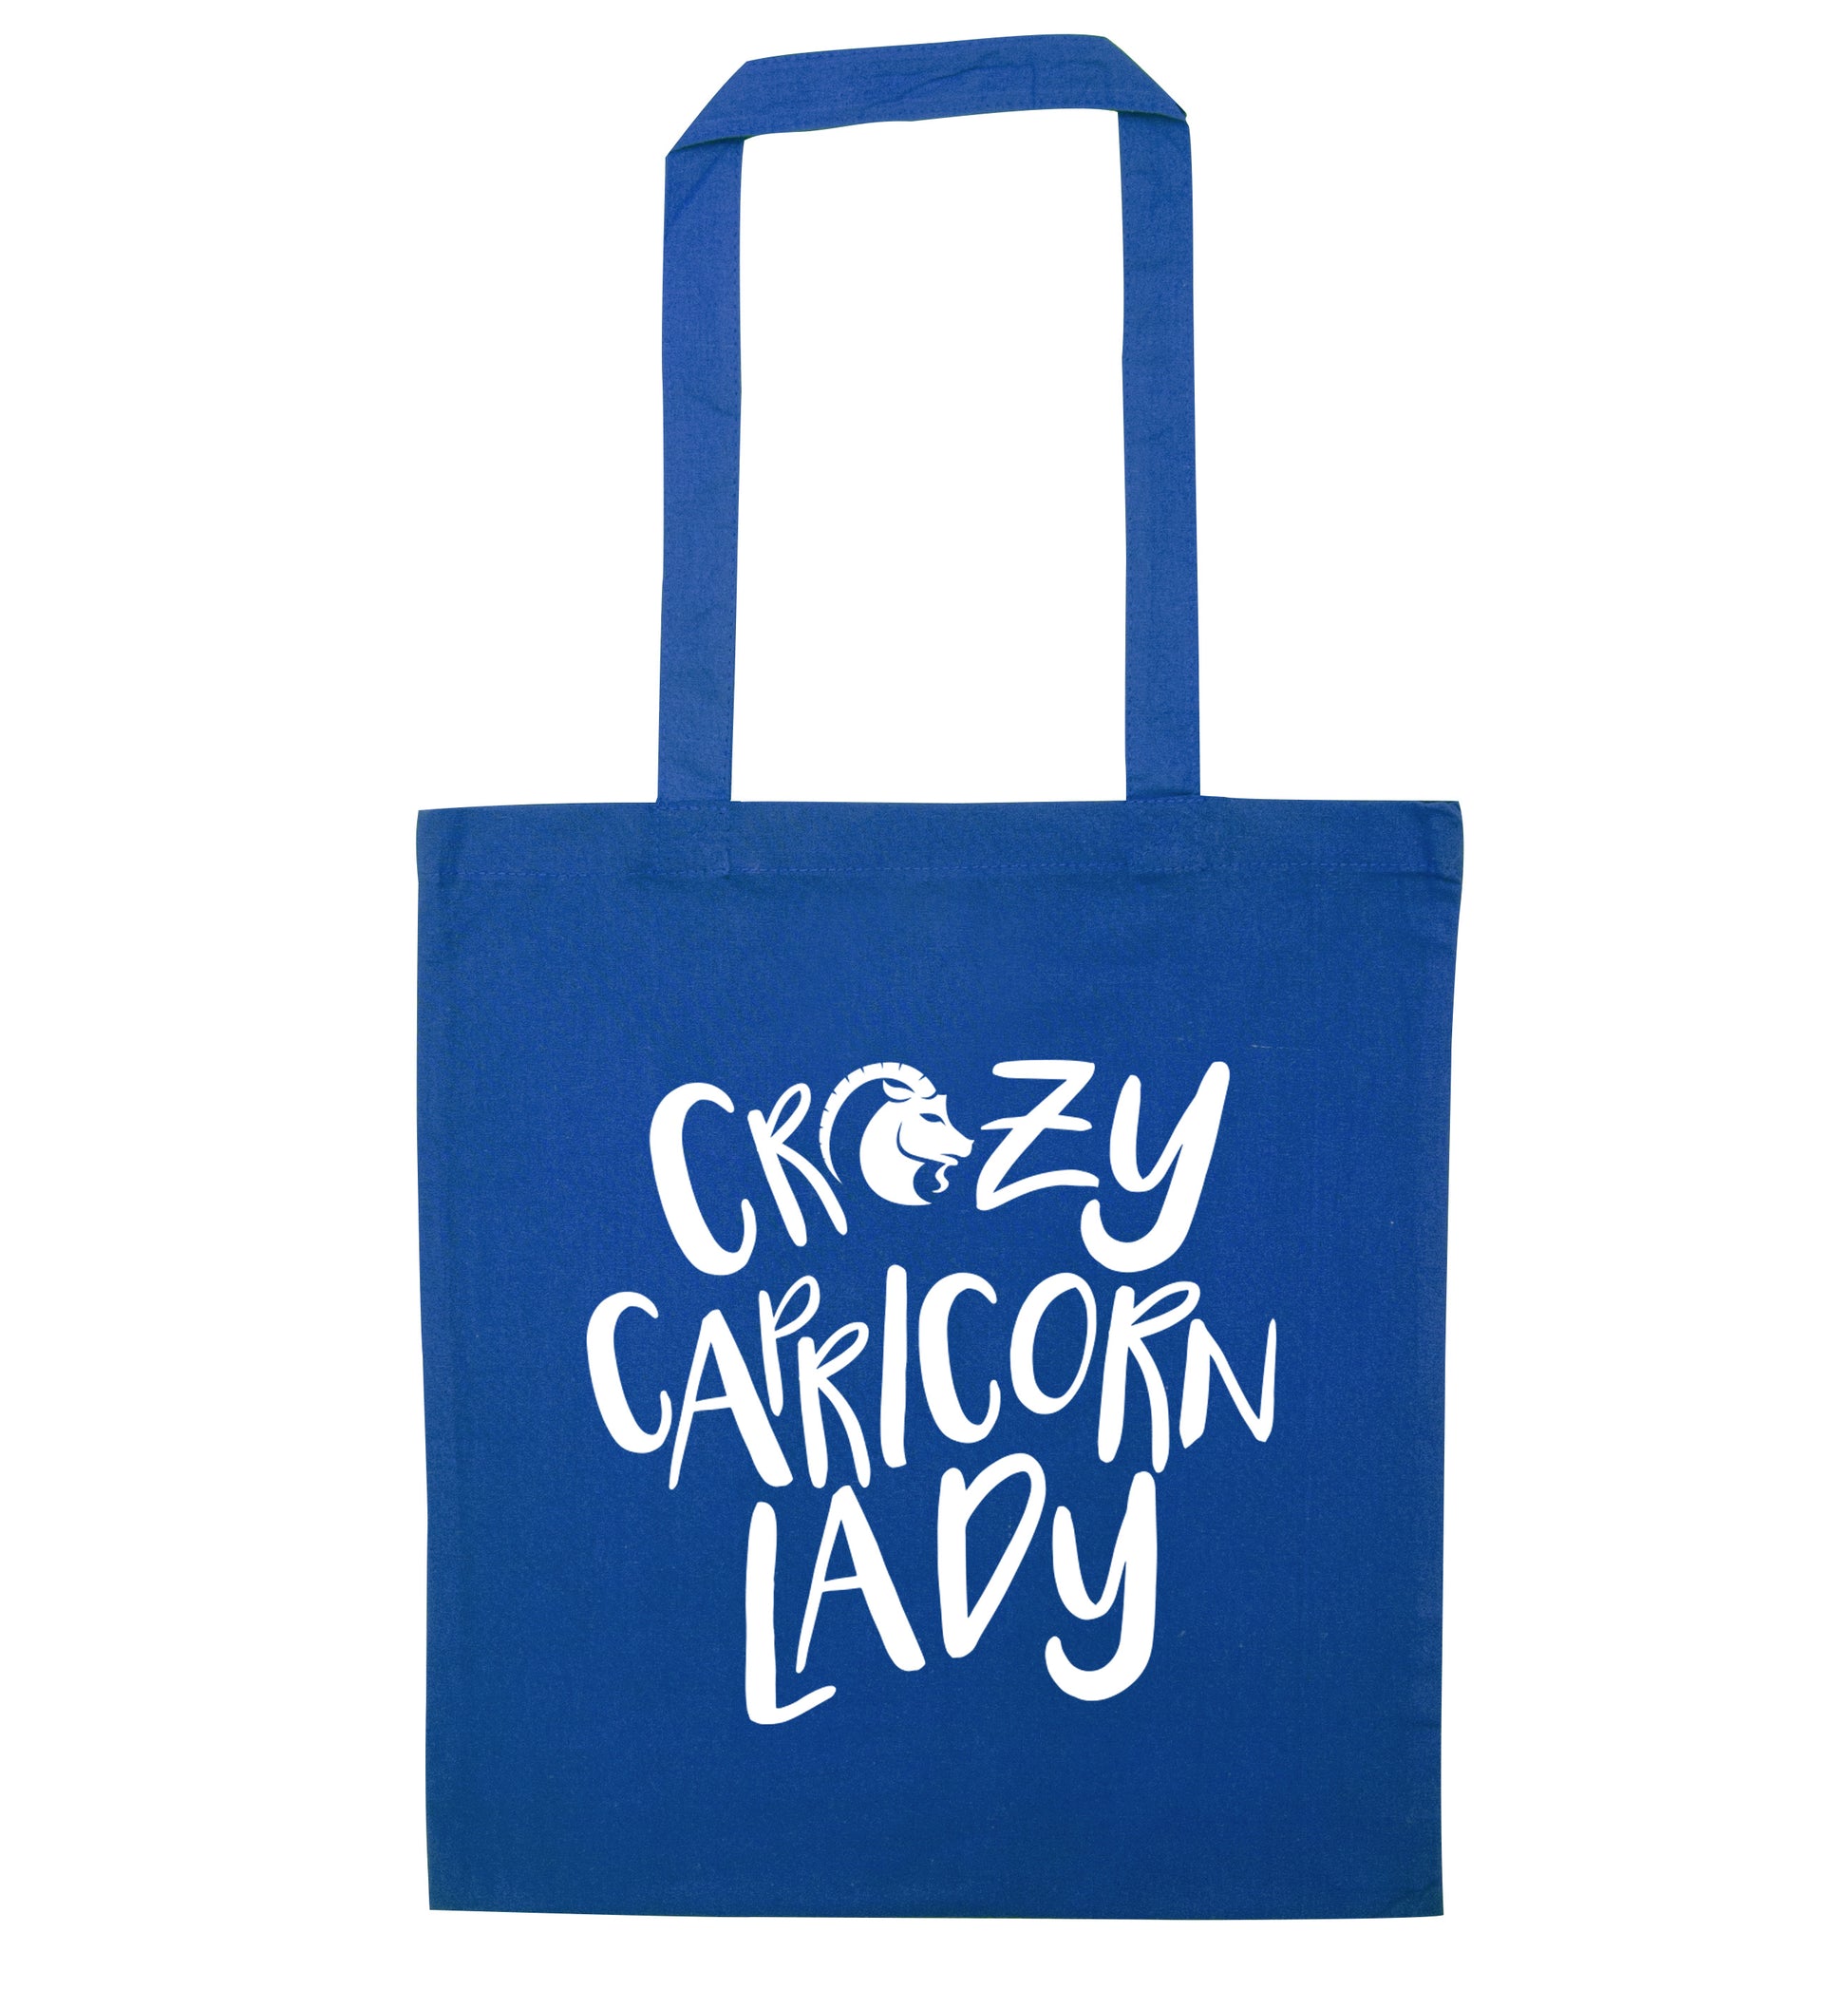 Crazy capricorn lady blue tote bag